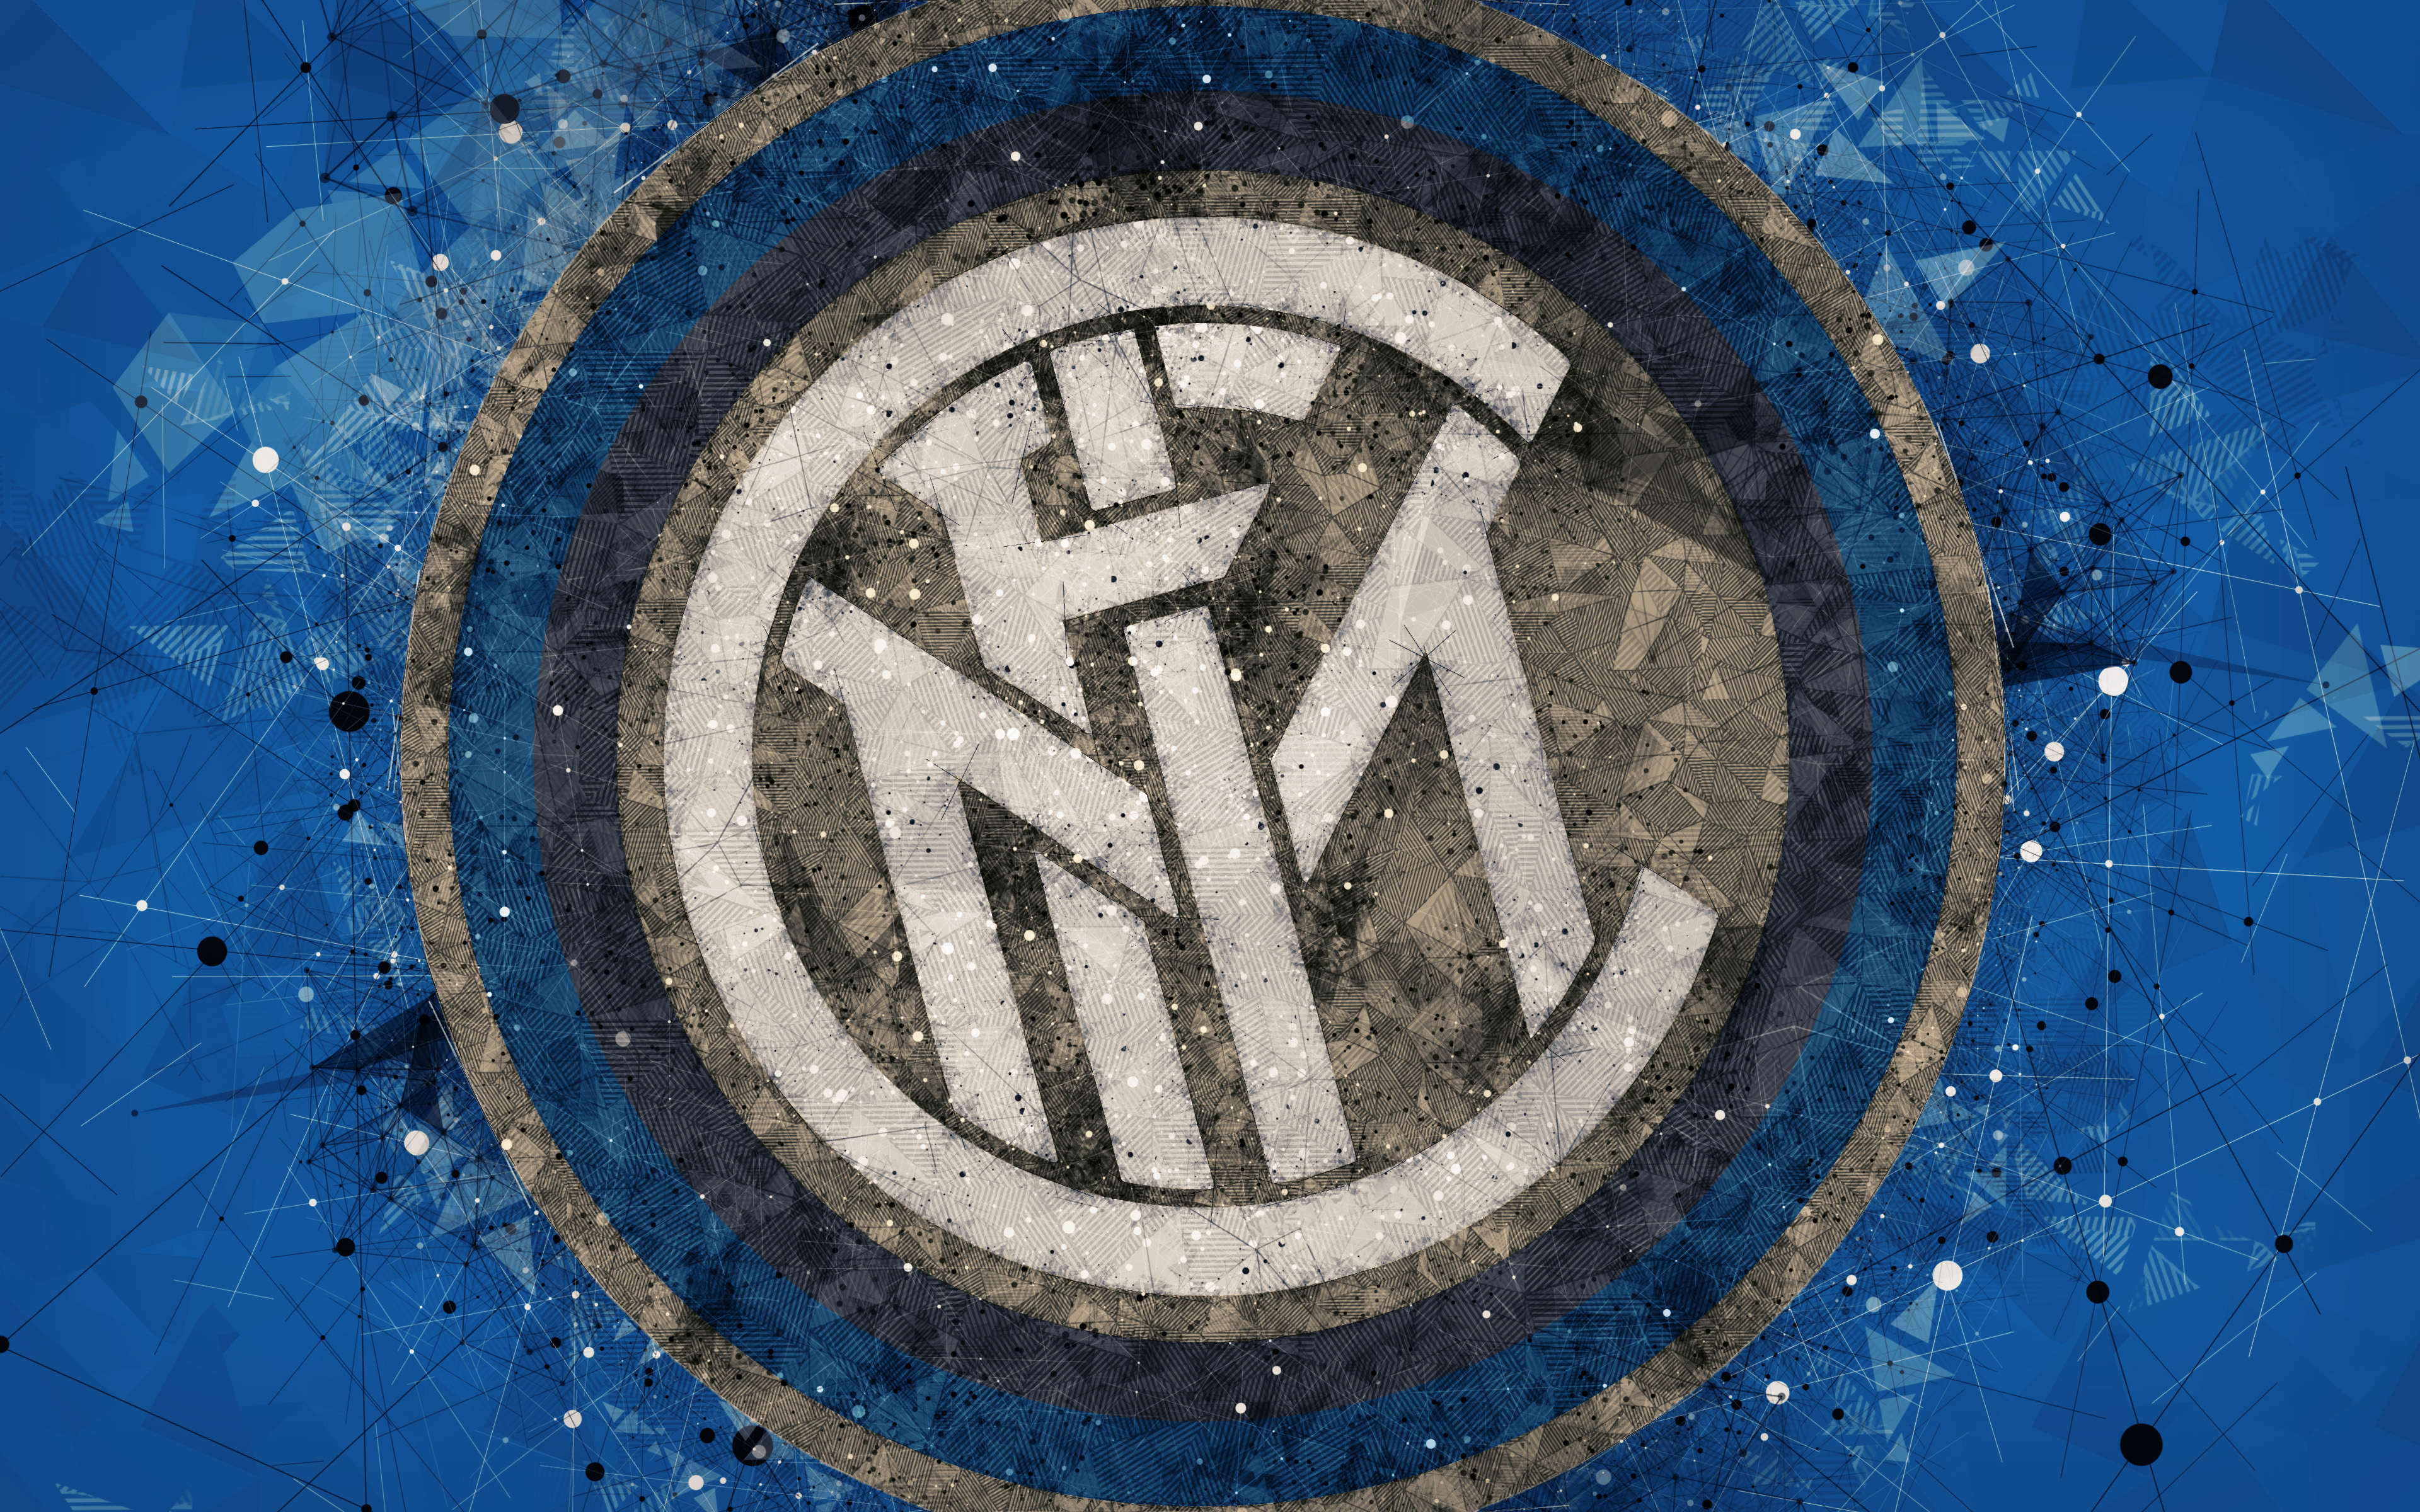 inter milan, sports, emblem, logo, soccer 32K